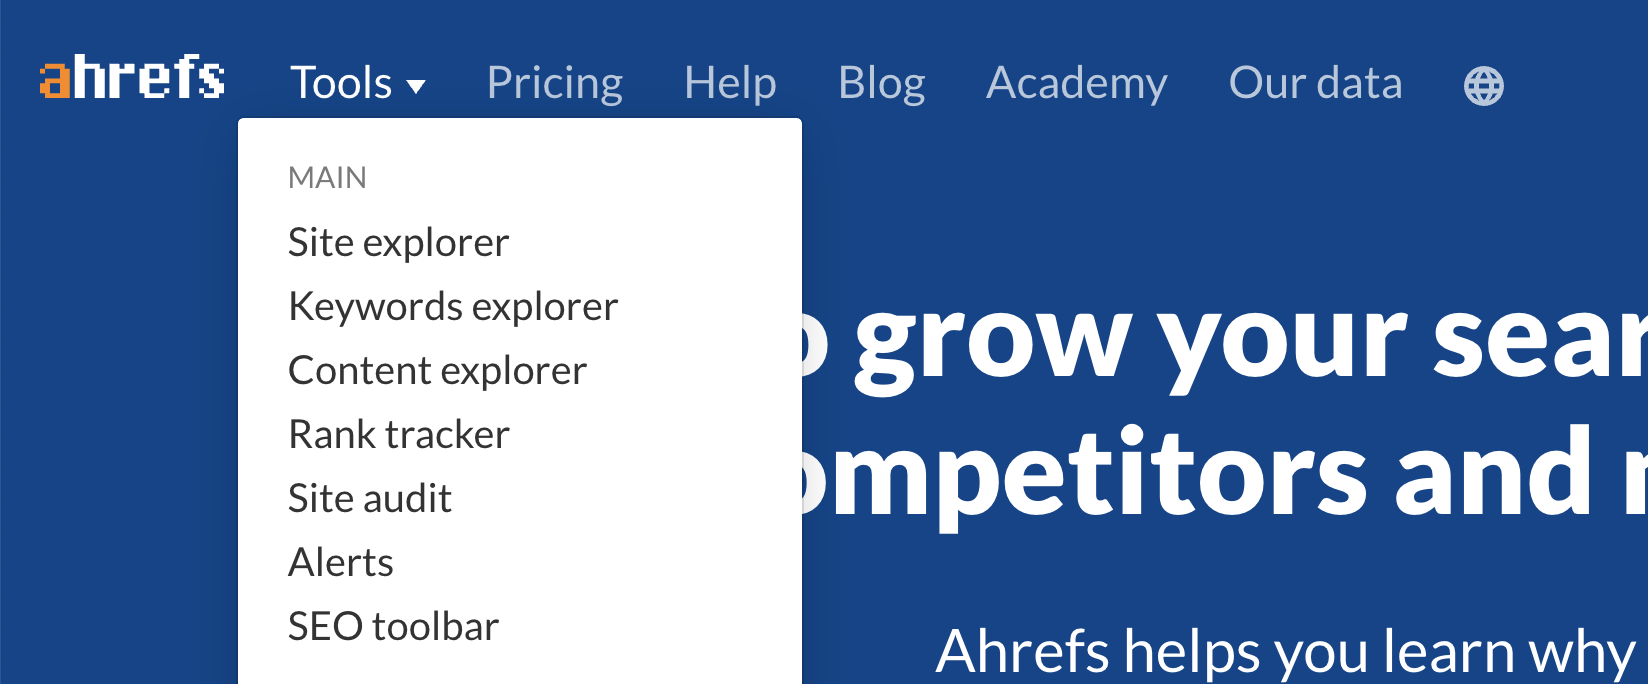 Ahrefs organizes their feedback boards by product